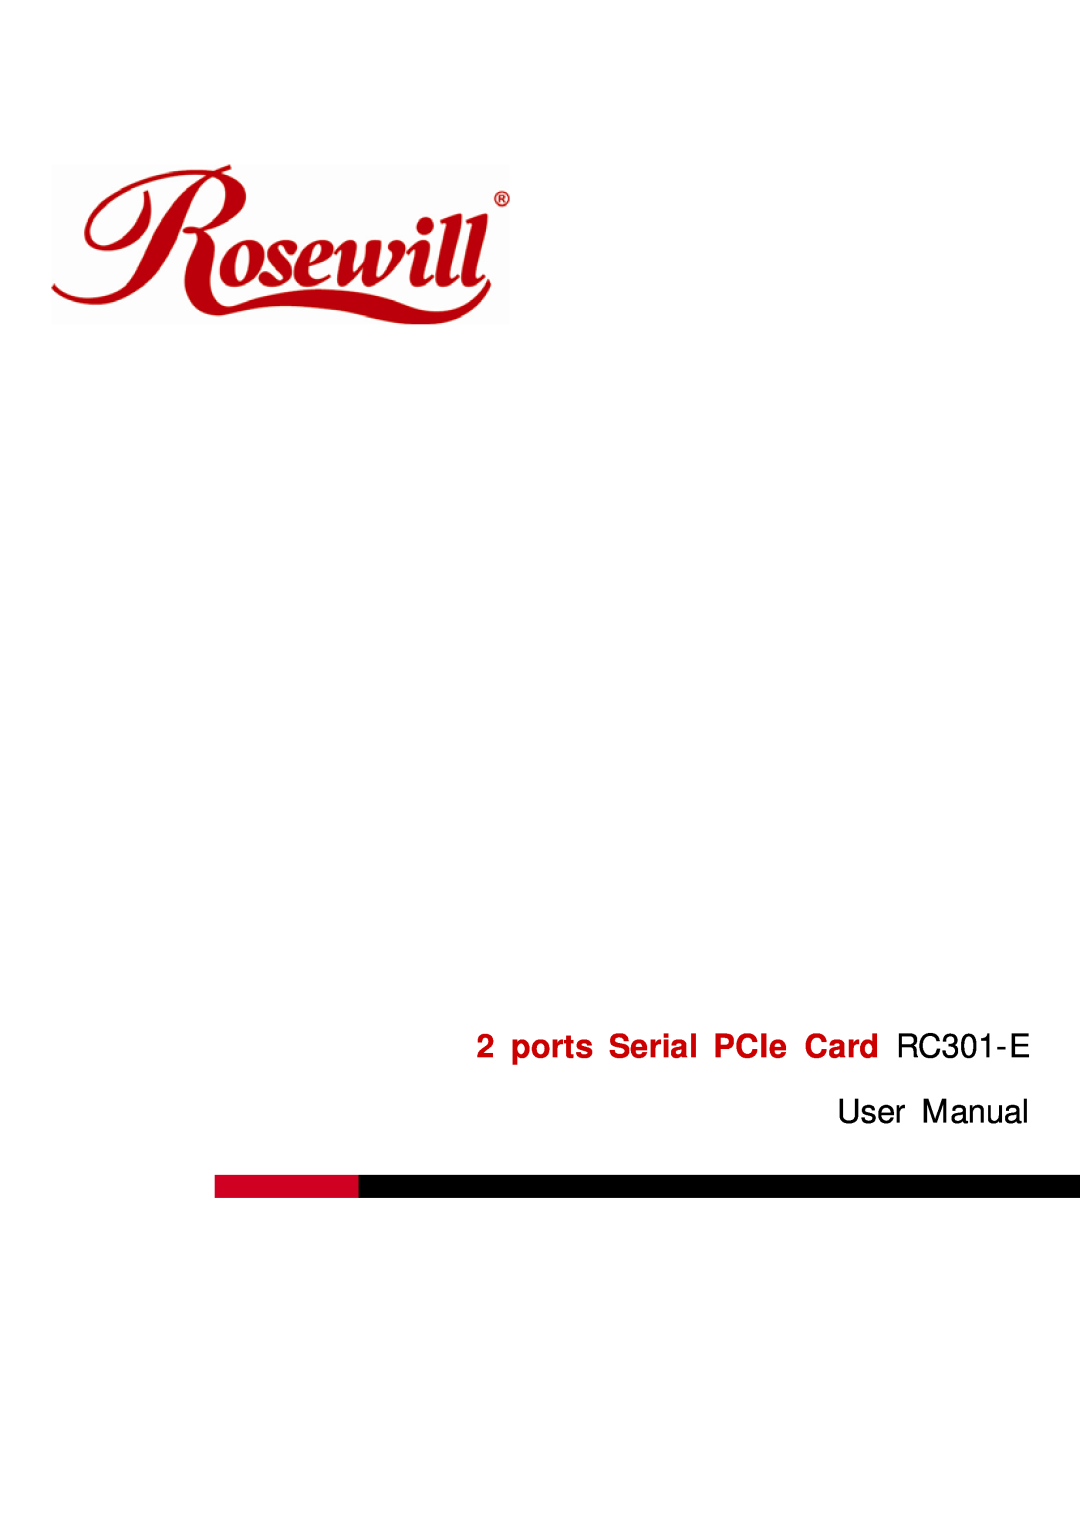 Rosewill RC-301E user manual ports Serial PCIe Card RC301-E User Manual 